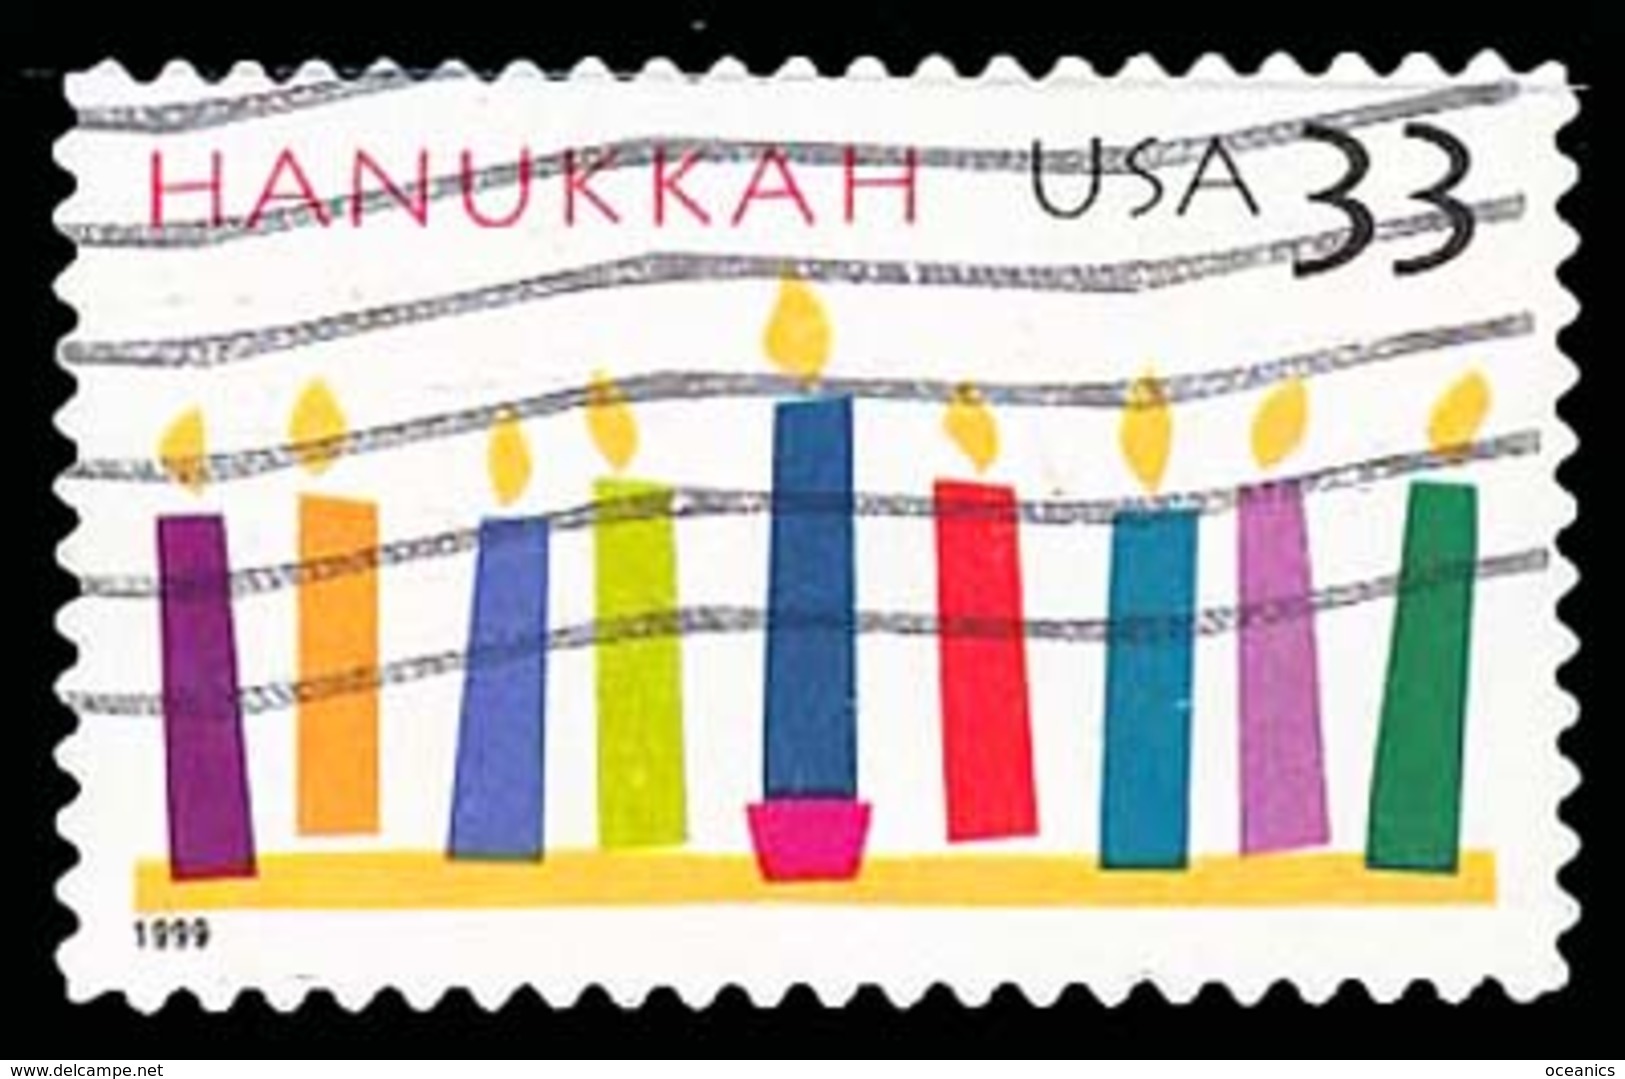 Etats-Unis / United States (Scott No.3352 - Hanukkah 33¢) (o) - Gebruikt